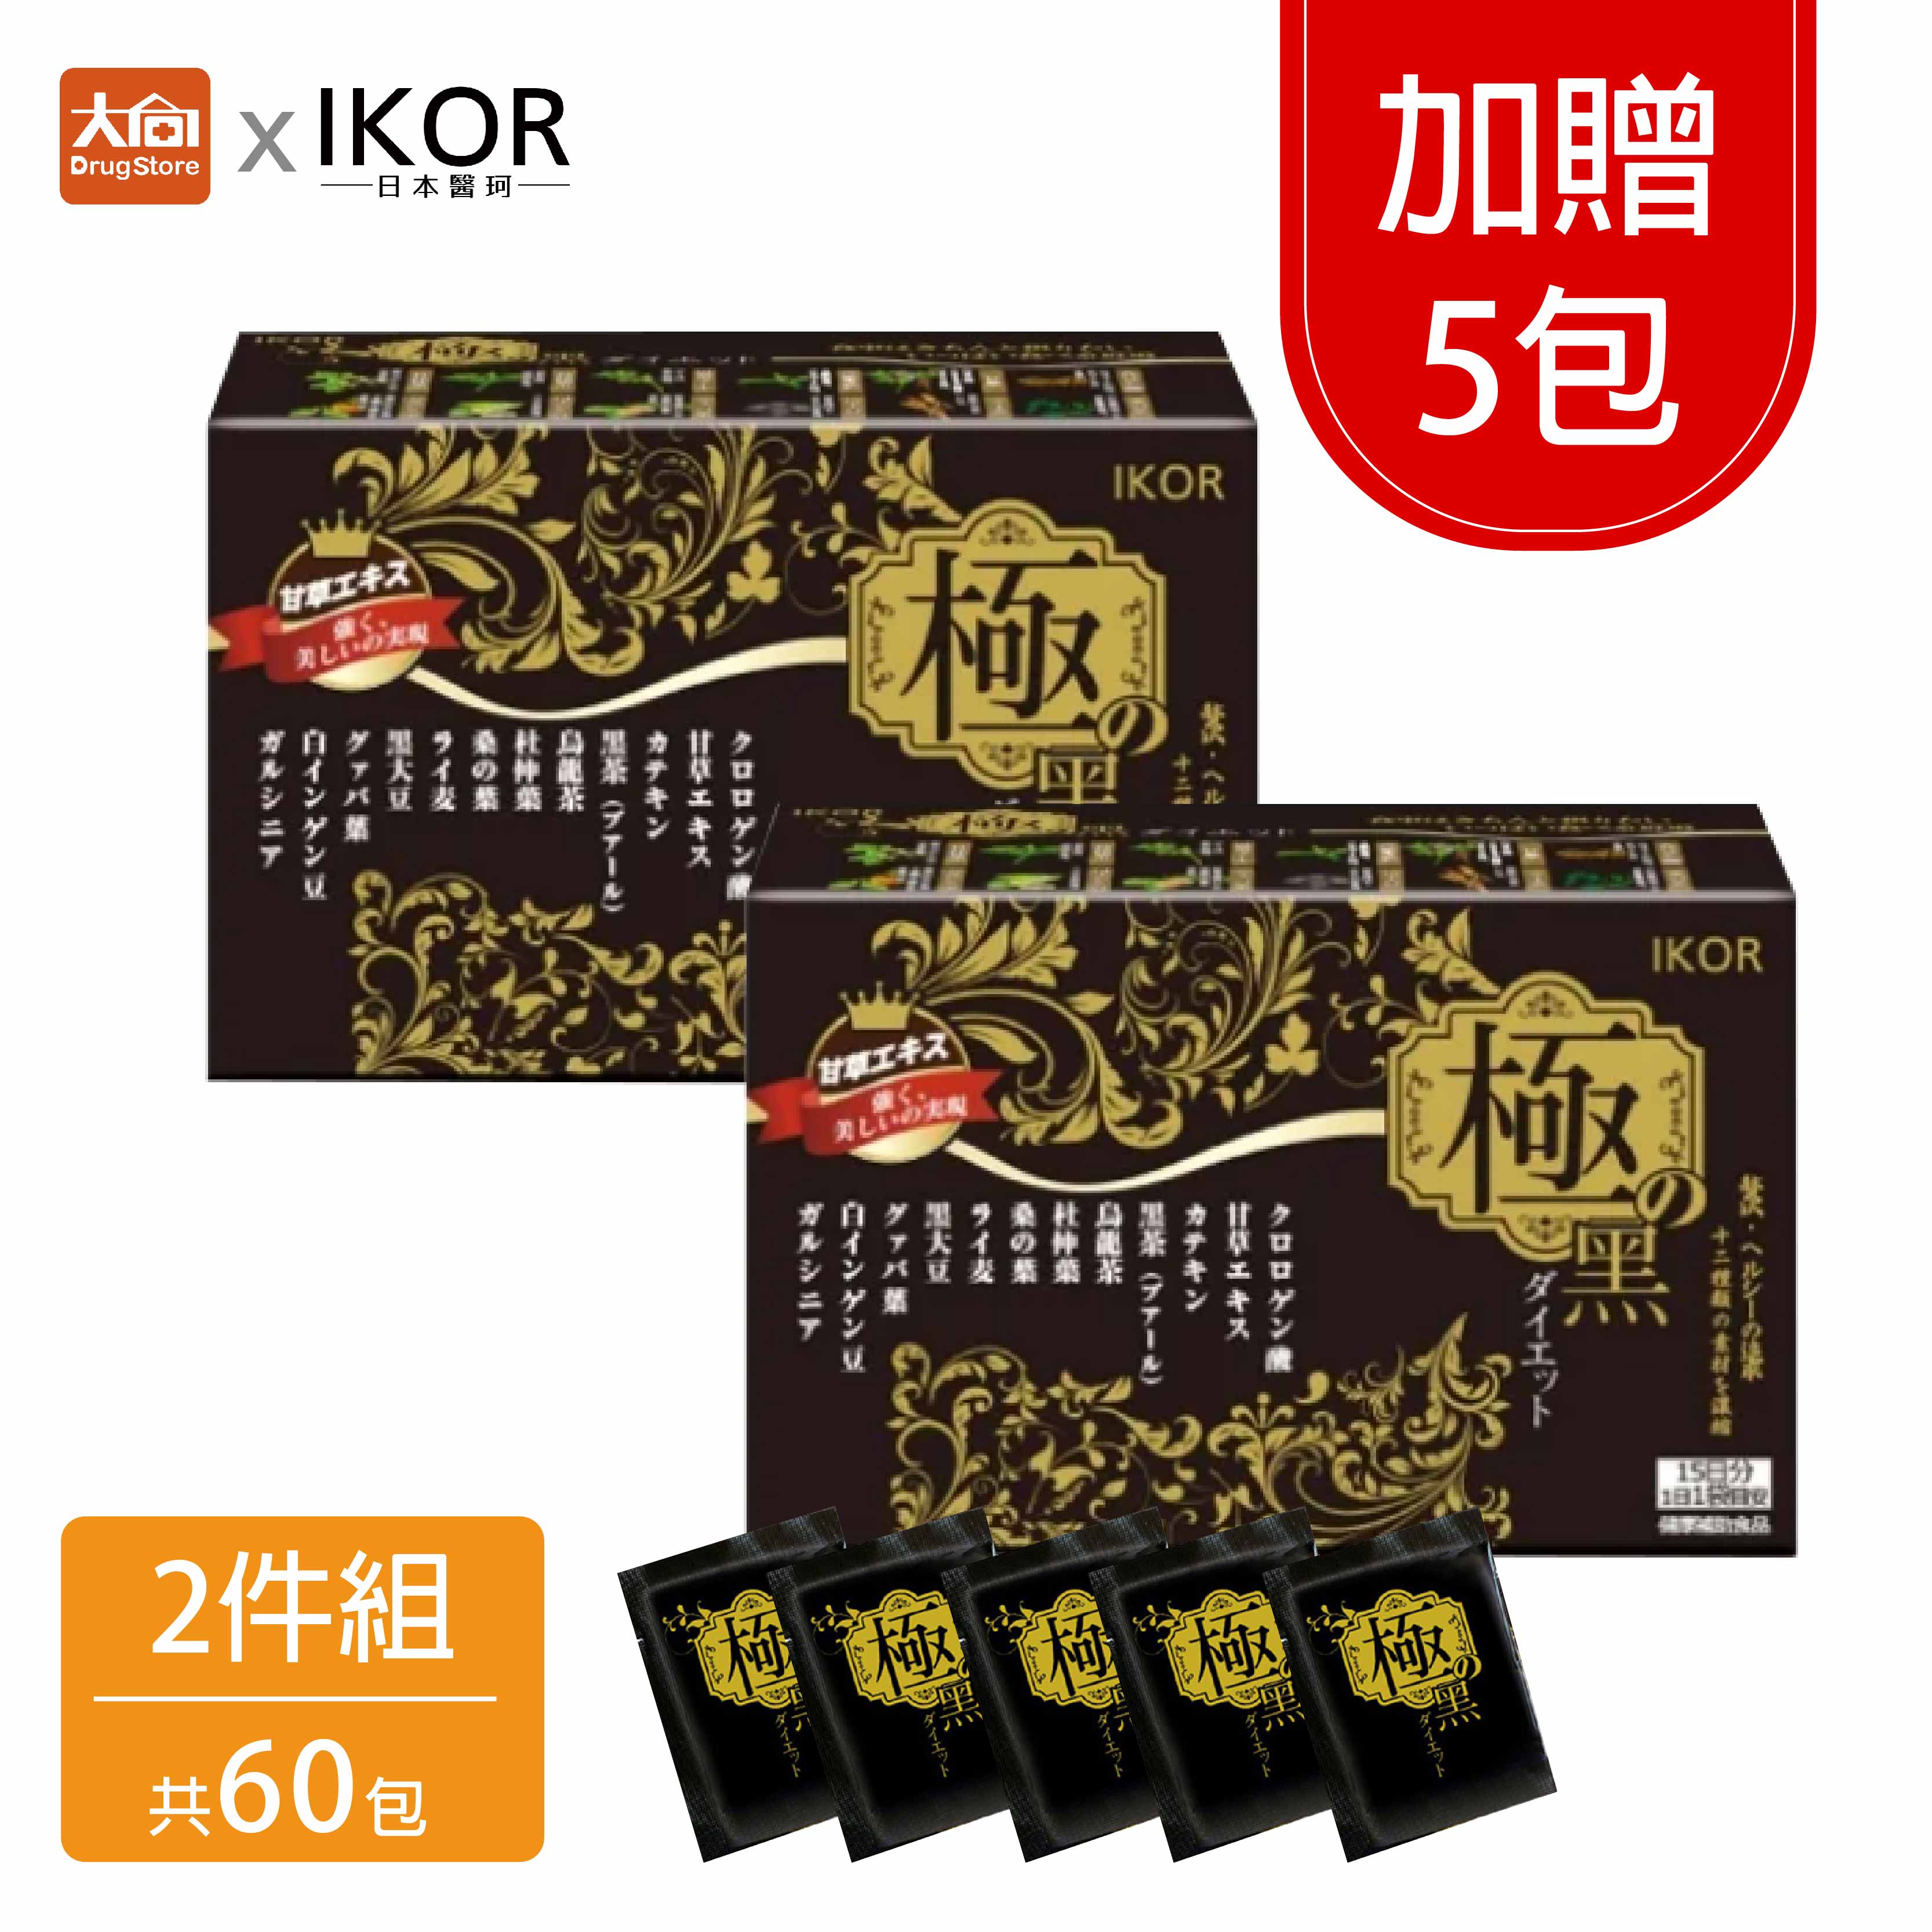 IKOR醫珂 極黑逆綠原酸15袋/盒【2件組】限時搶購!